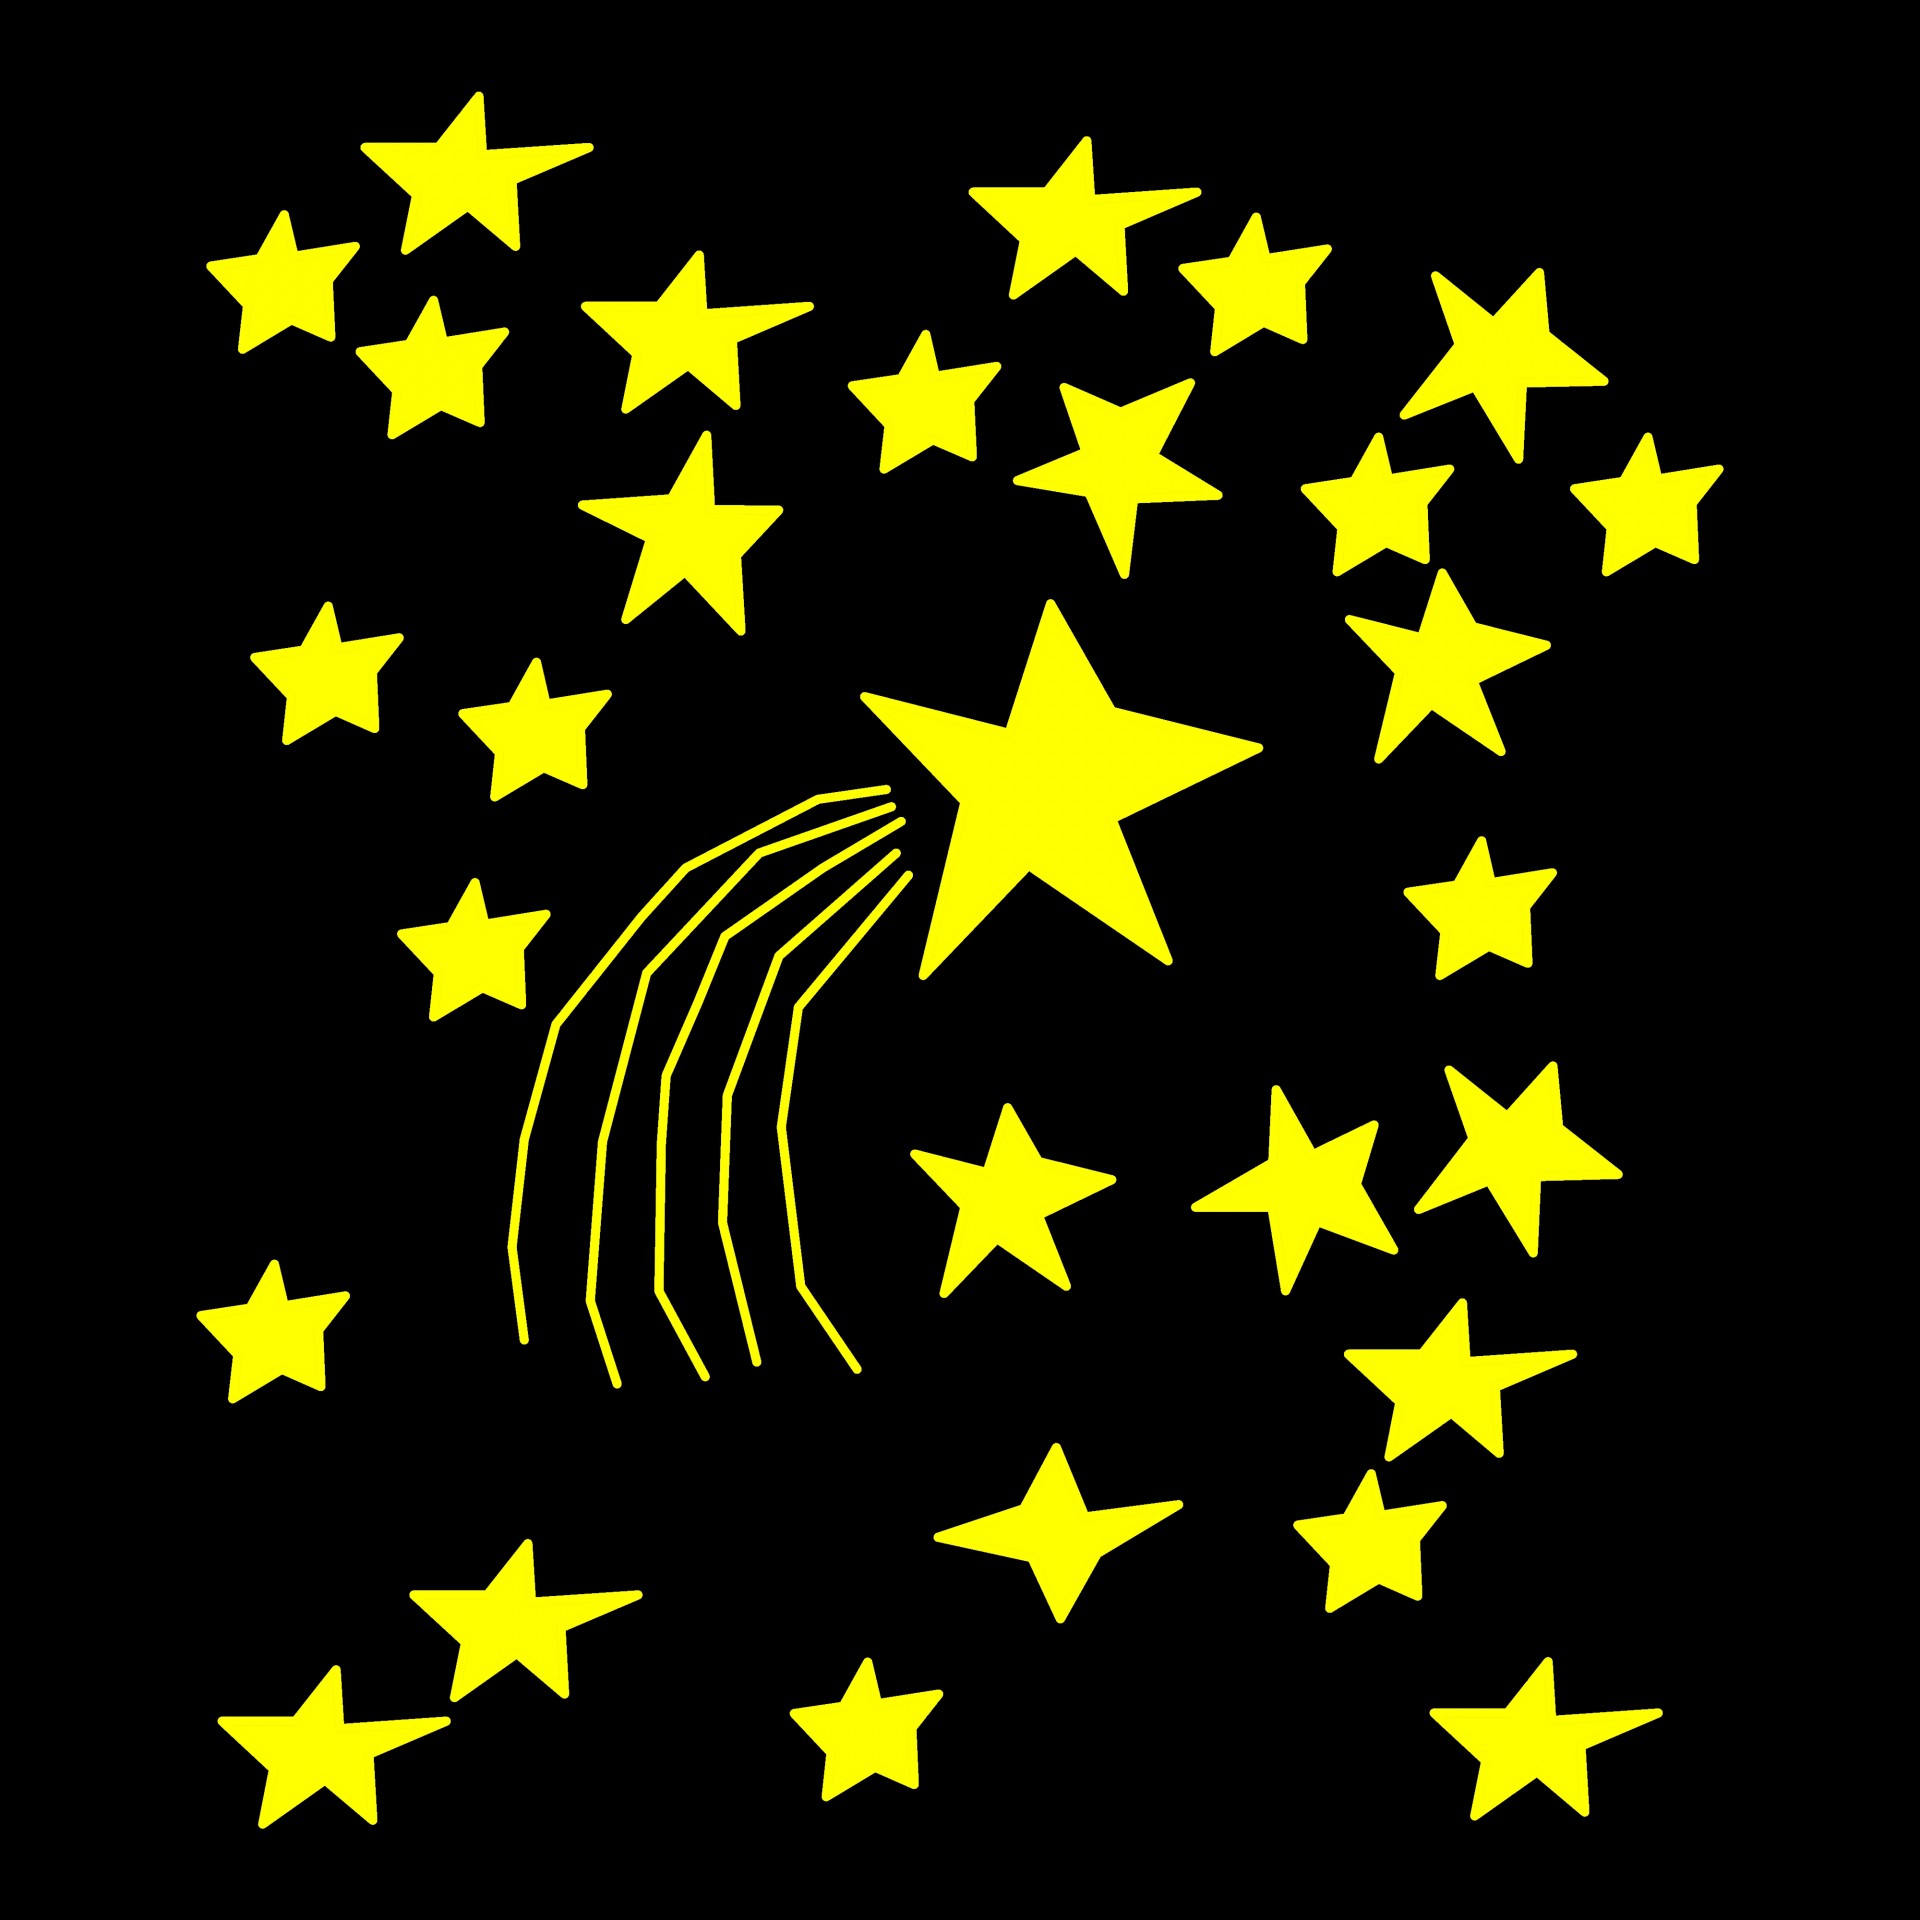 yellow comet and yellow stars on black sky